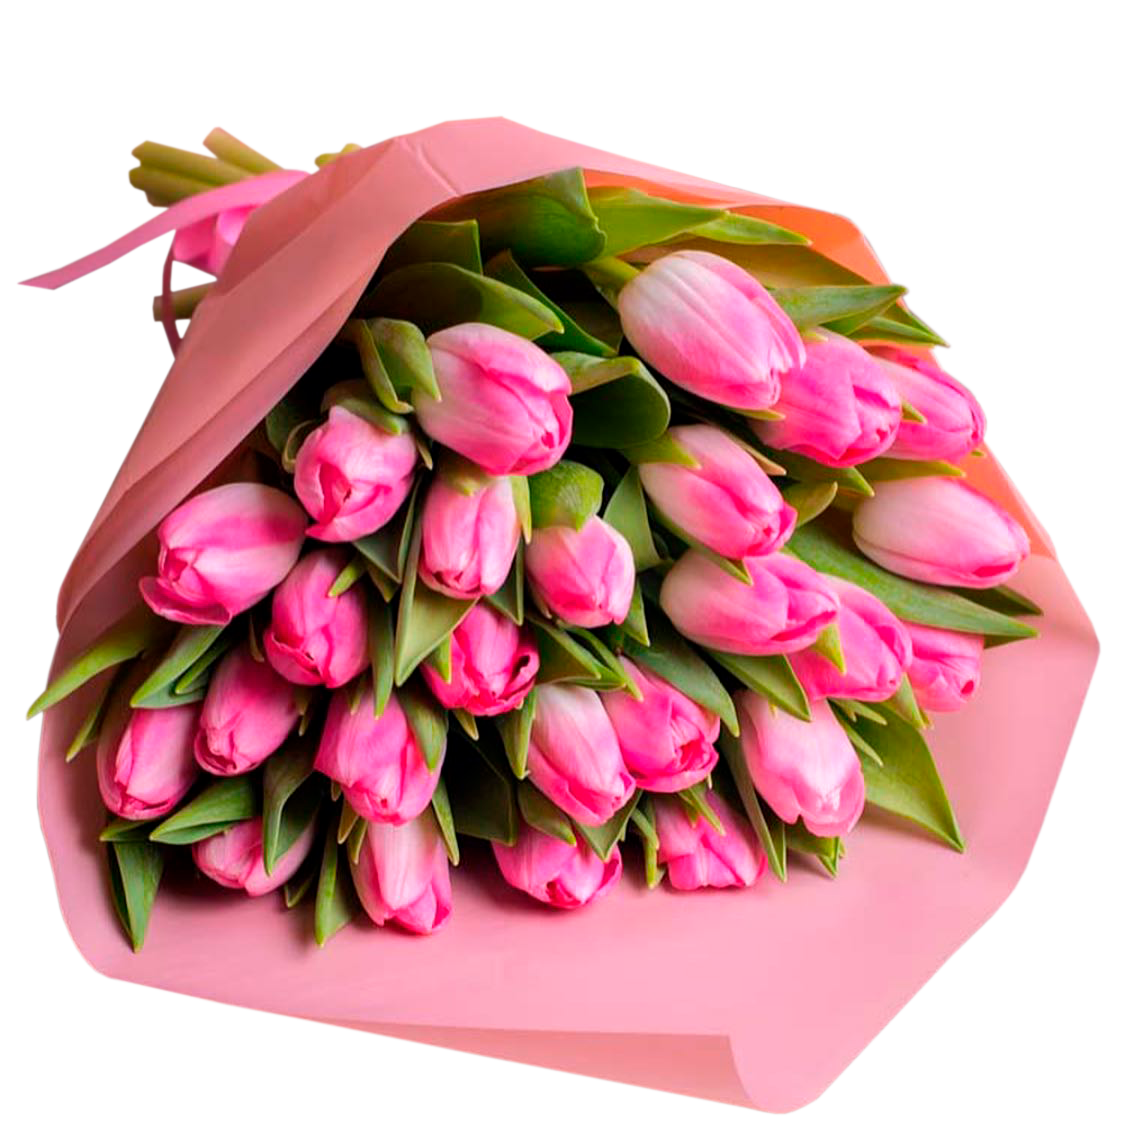 Sollnushko Love tulips image: 1